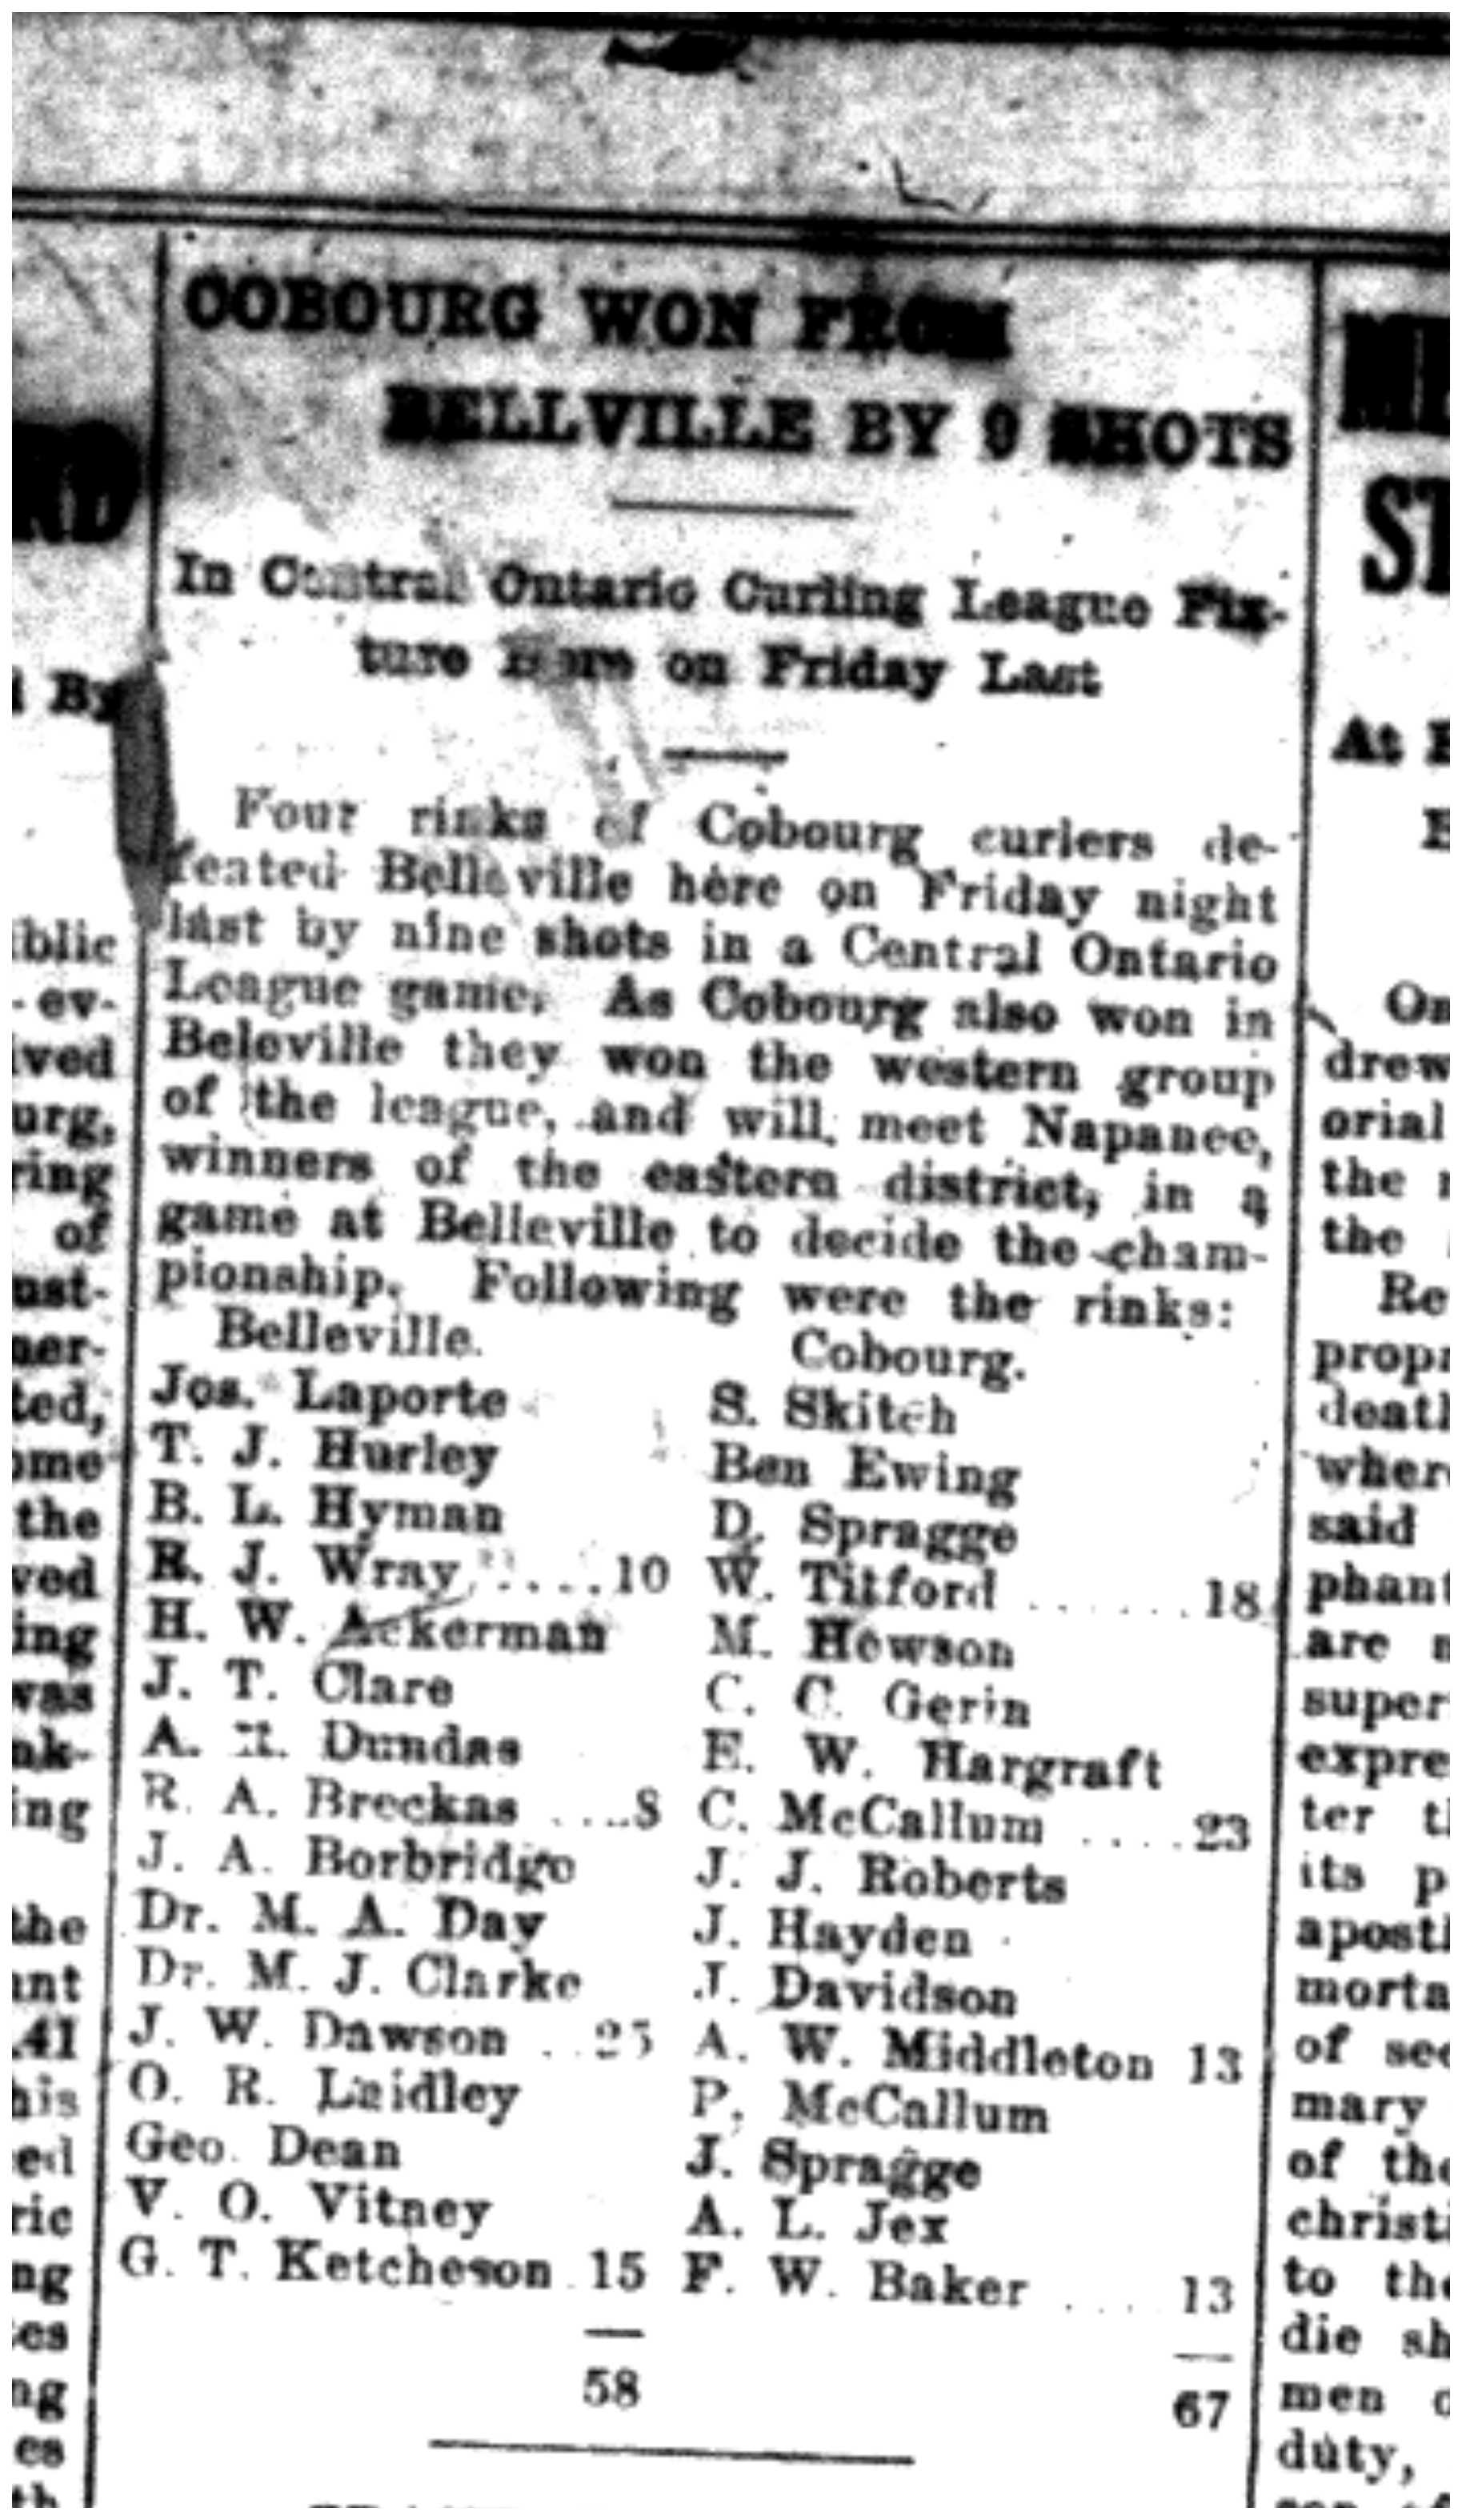 1921-03-03 Curling -Central Ontario League